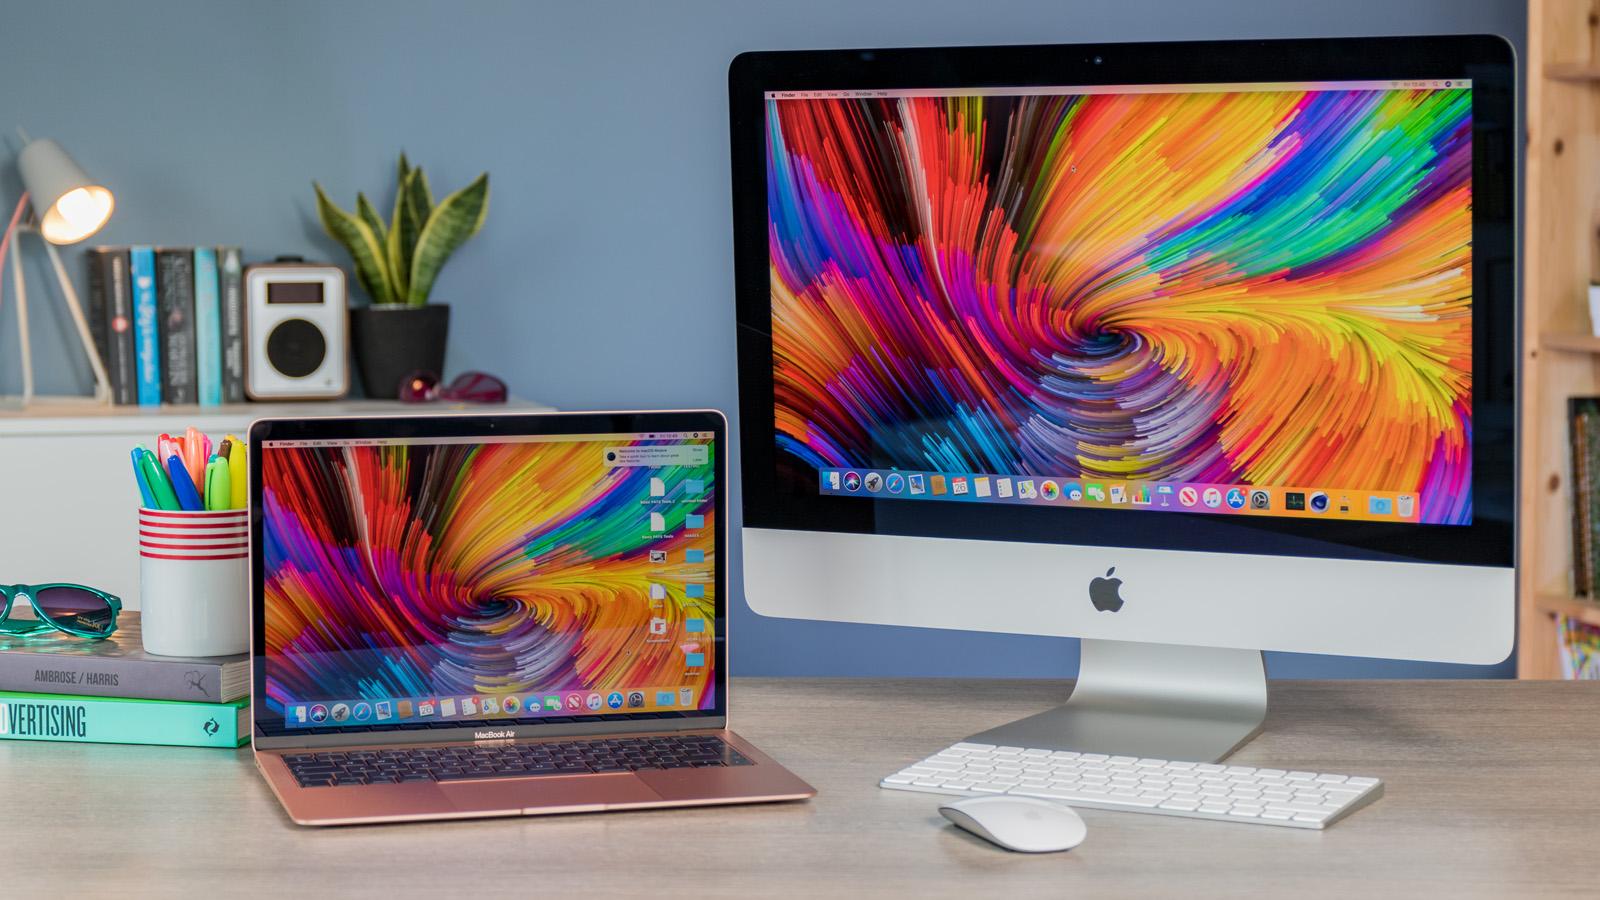 iMac and MacBook